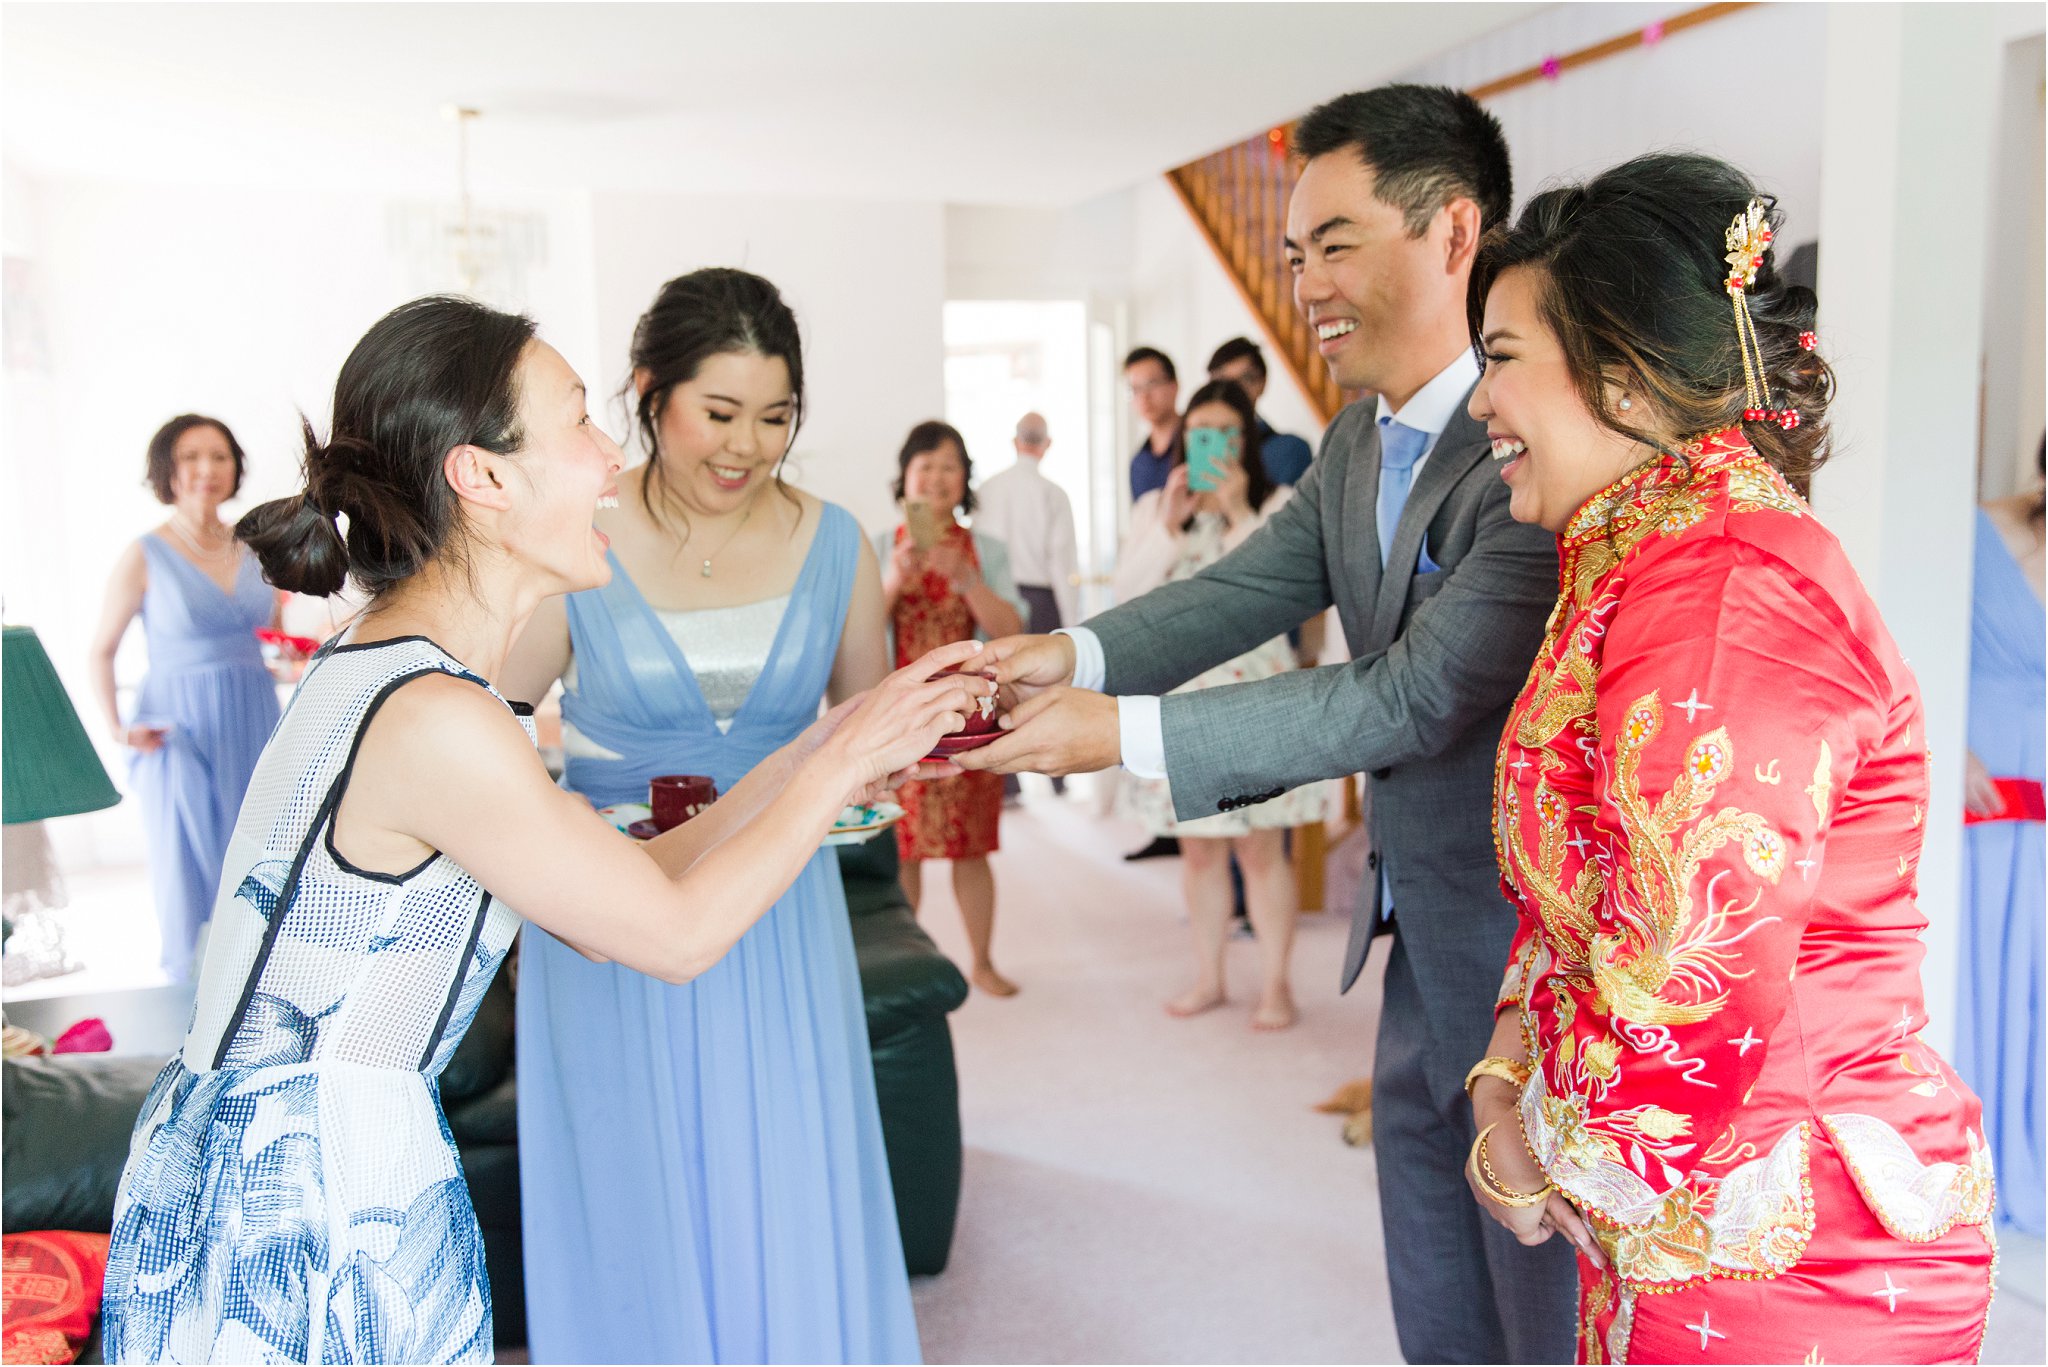 Windermere Golf Course wedding photos, edmonton wedding photographer, nc photography, chinese wedding, chinese tea ceremony, edmonton wedding photos